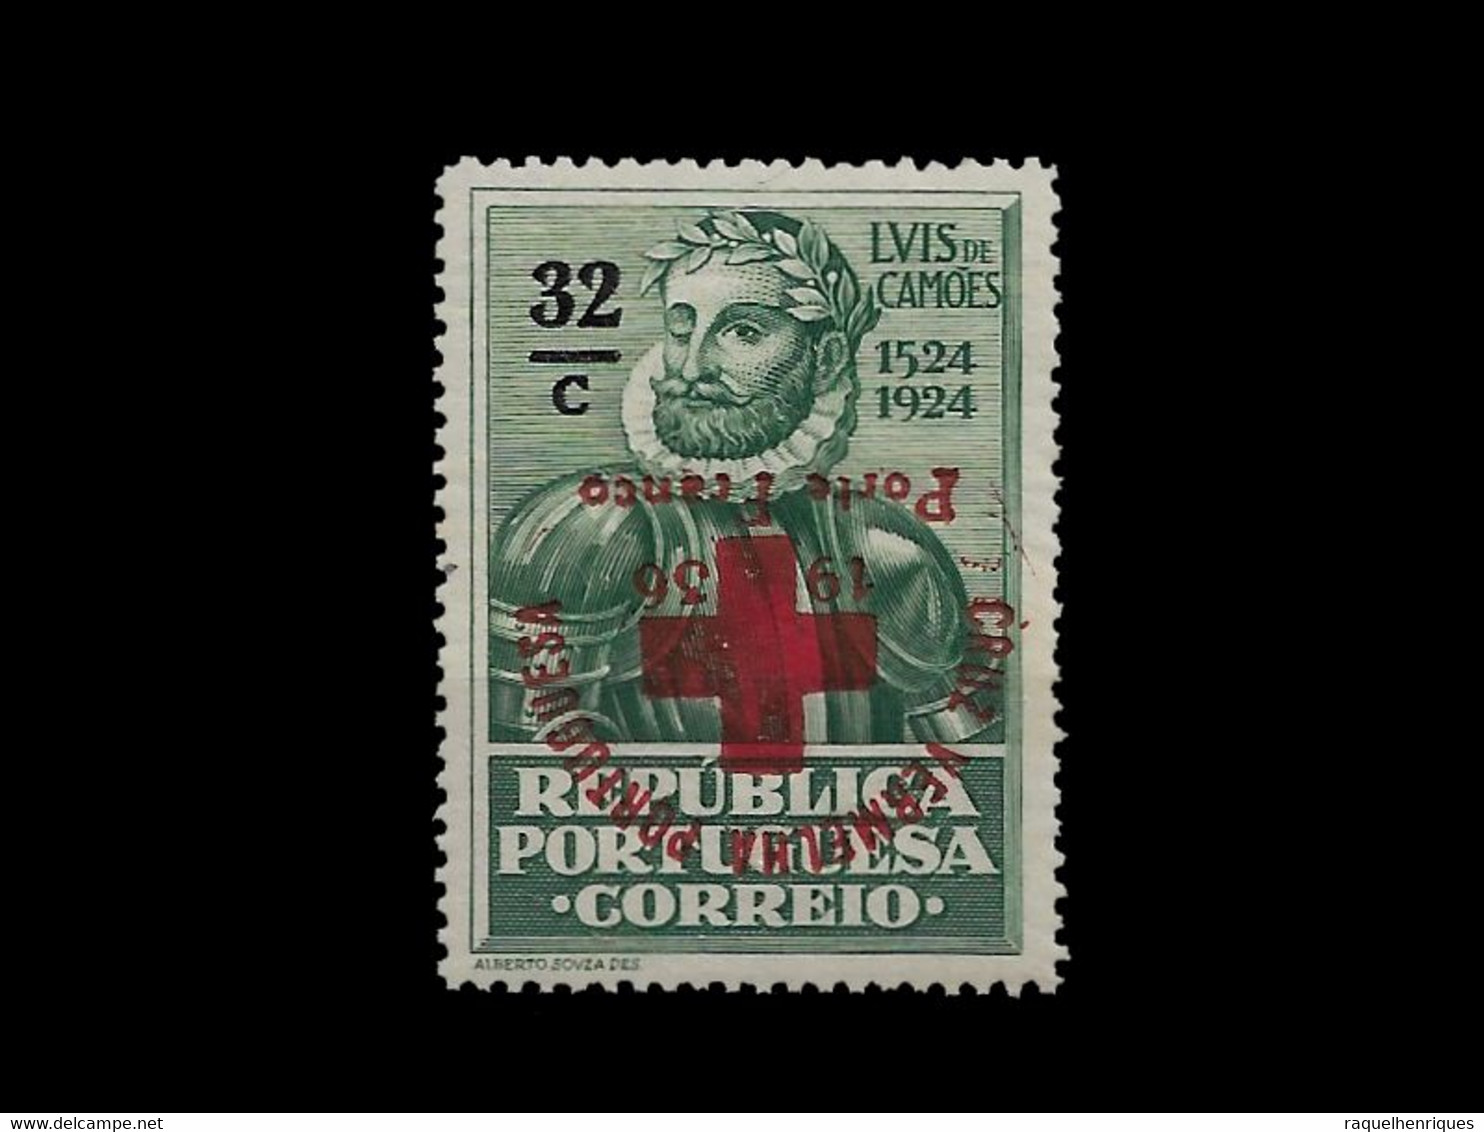 PORTUGAL PORTE FRANCO - 1936 ERROR UPSIDE DOWN SURCHARGED MNH (PLB#01-135) - Ungebraucht